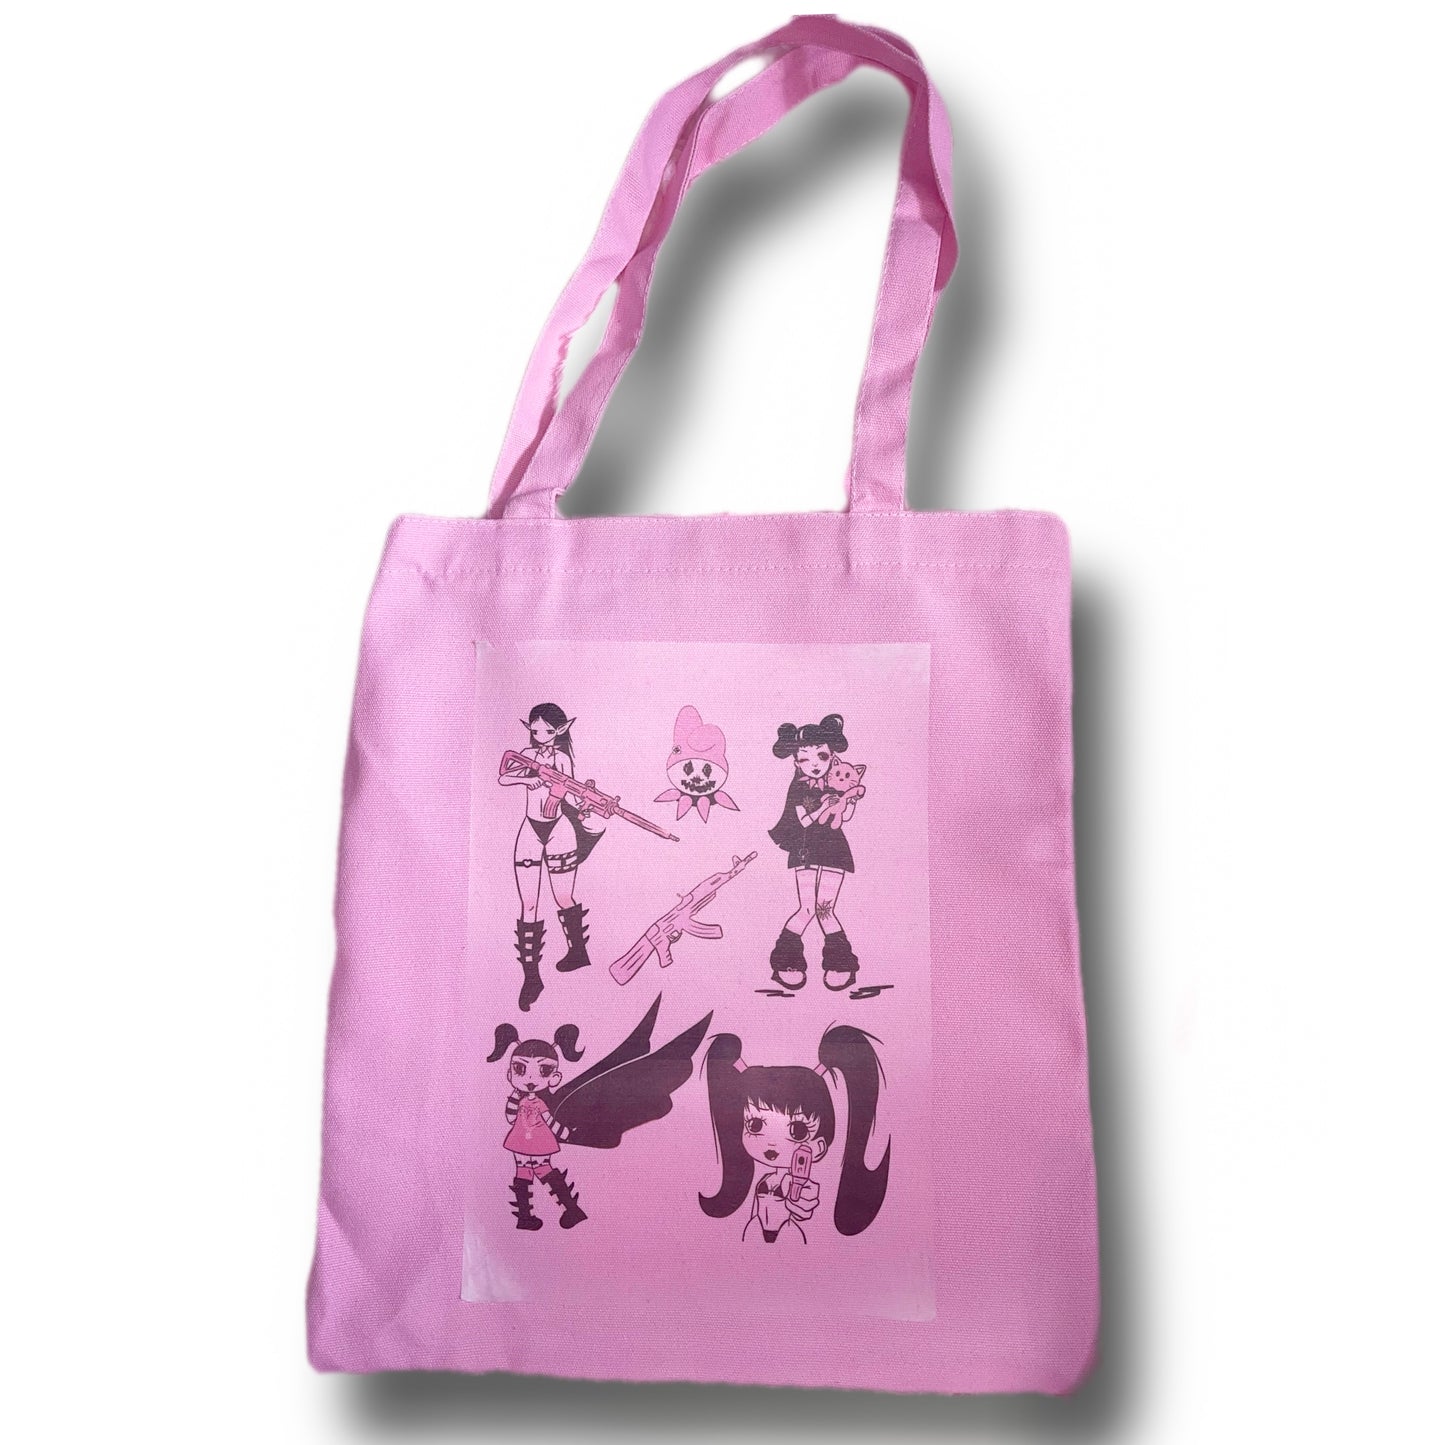 Goth anime girl tote bag